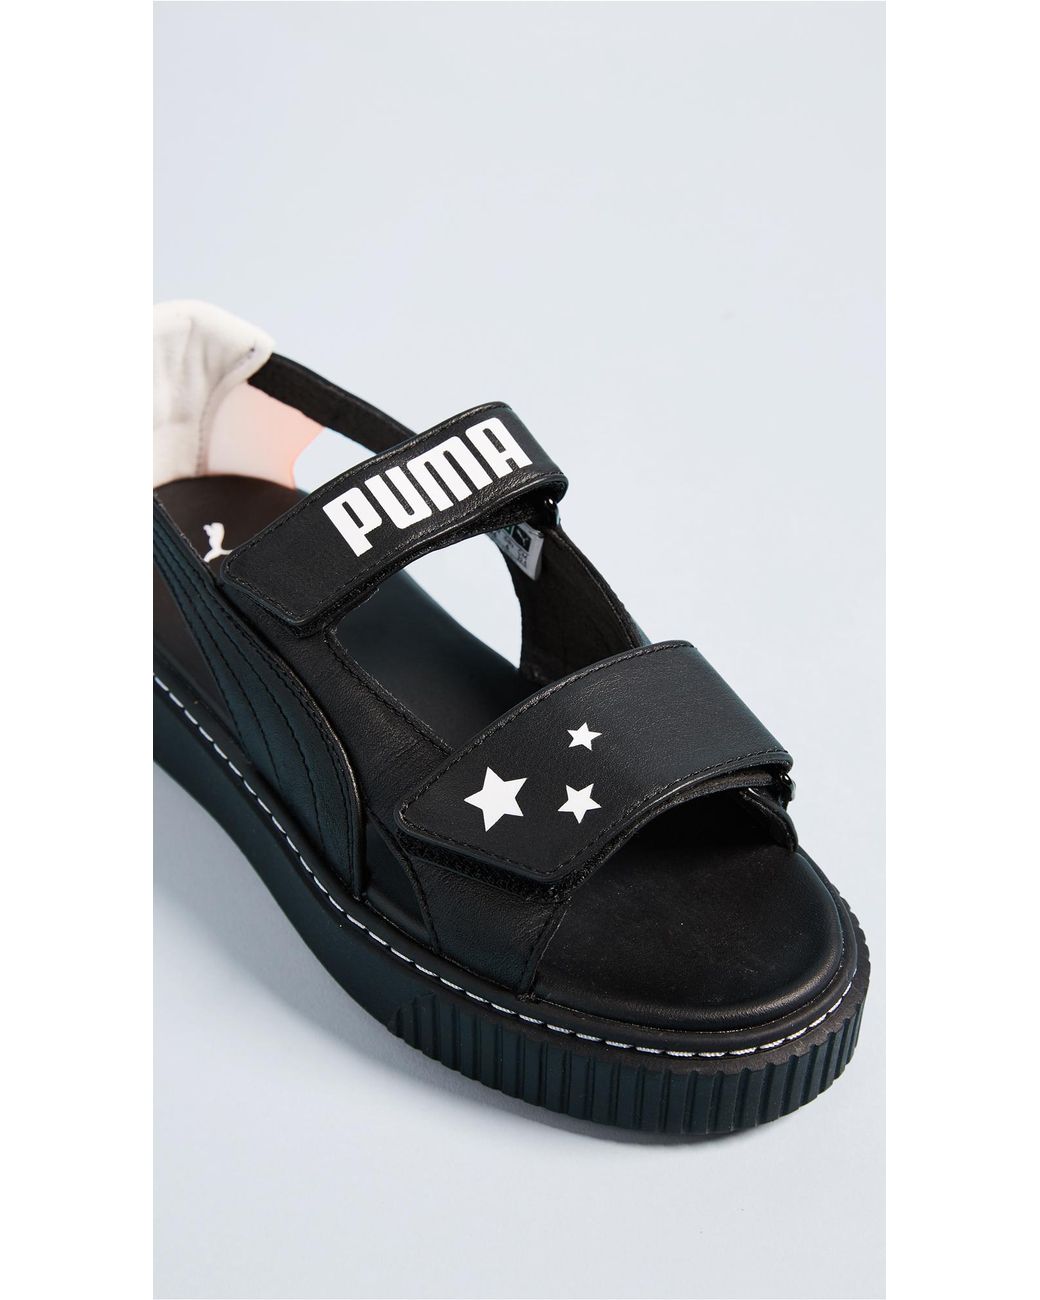 PUMA Women's Black X Sophia Webster Platform Sandals